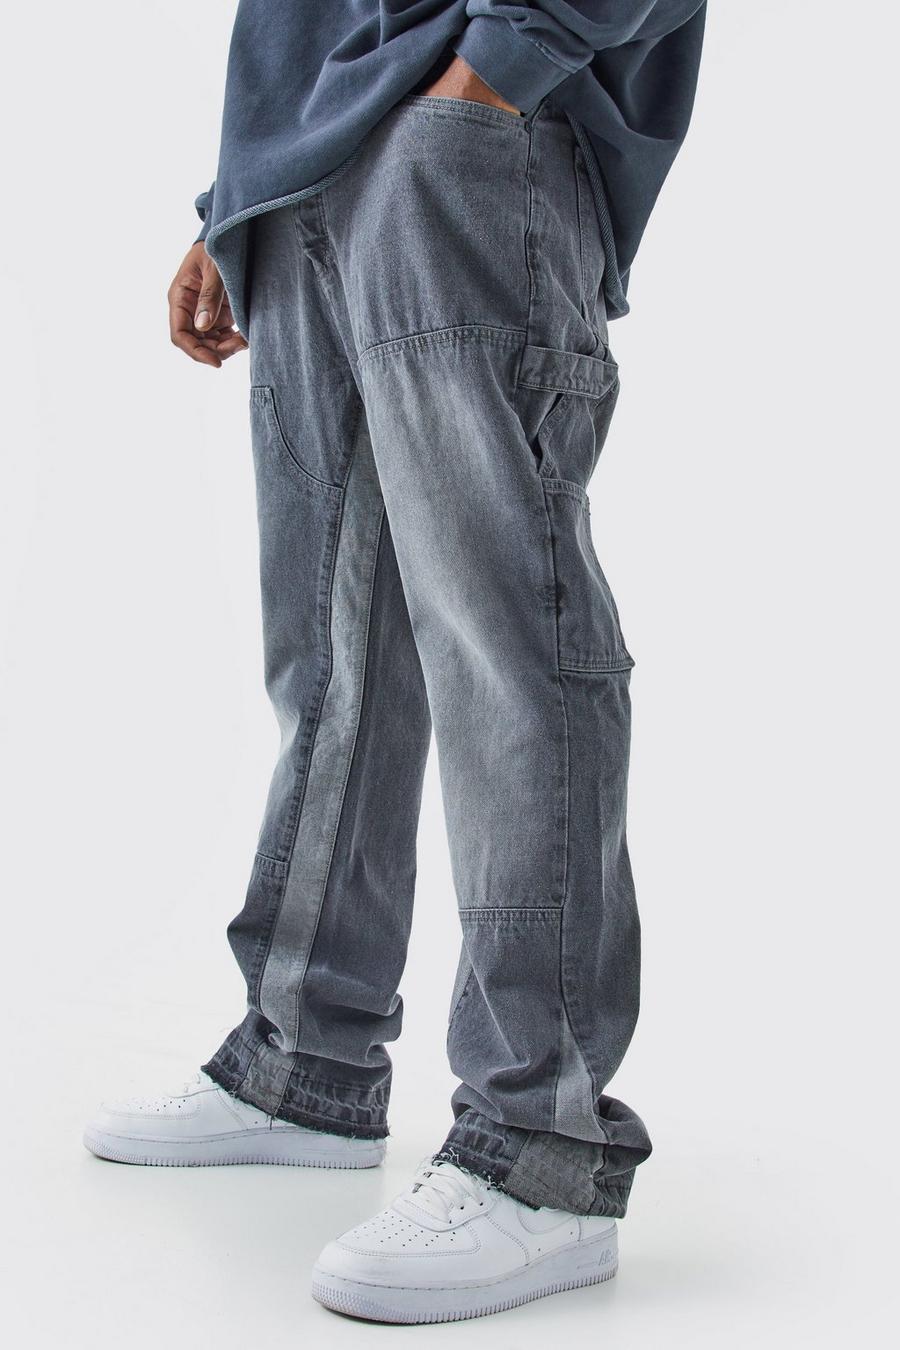 Jeans Plus Size Slim Fit in denim rigido con inserti stile Carpenter, Grey image number 1